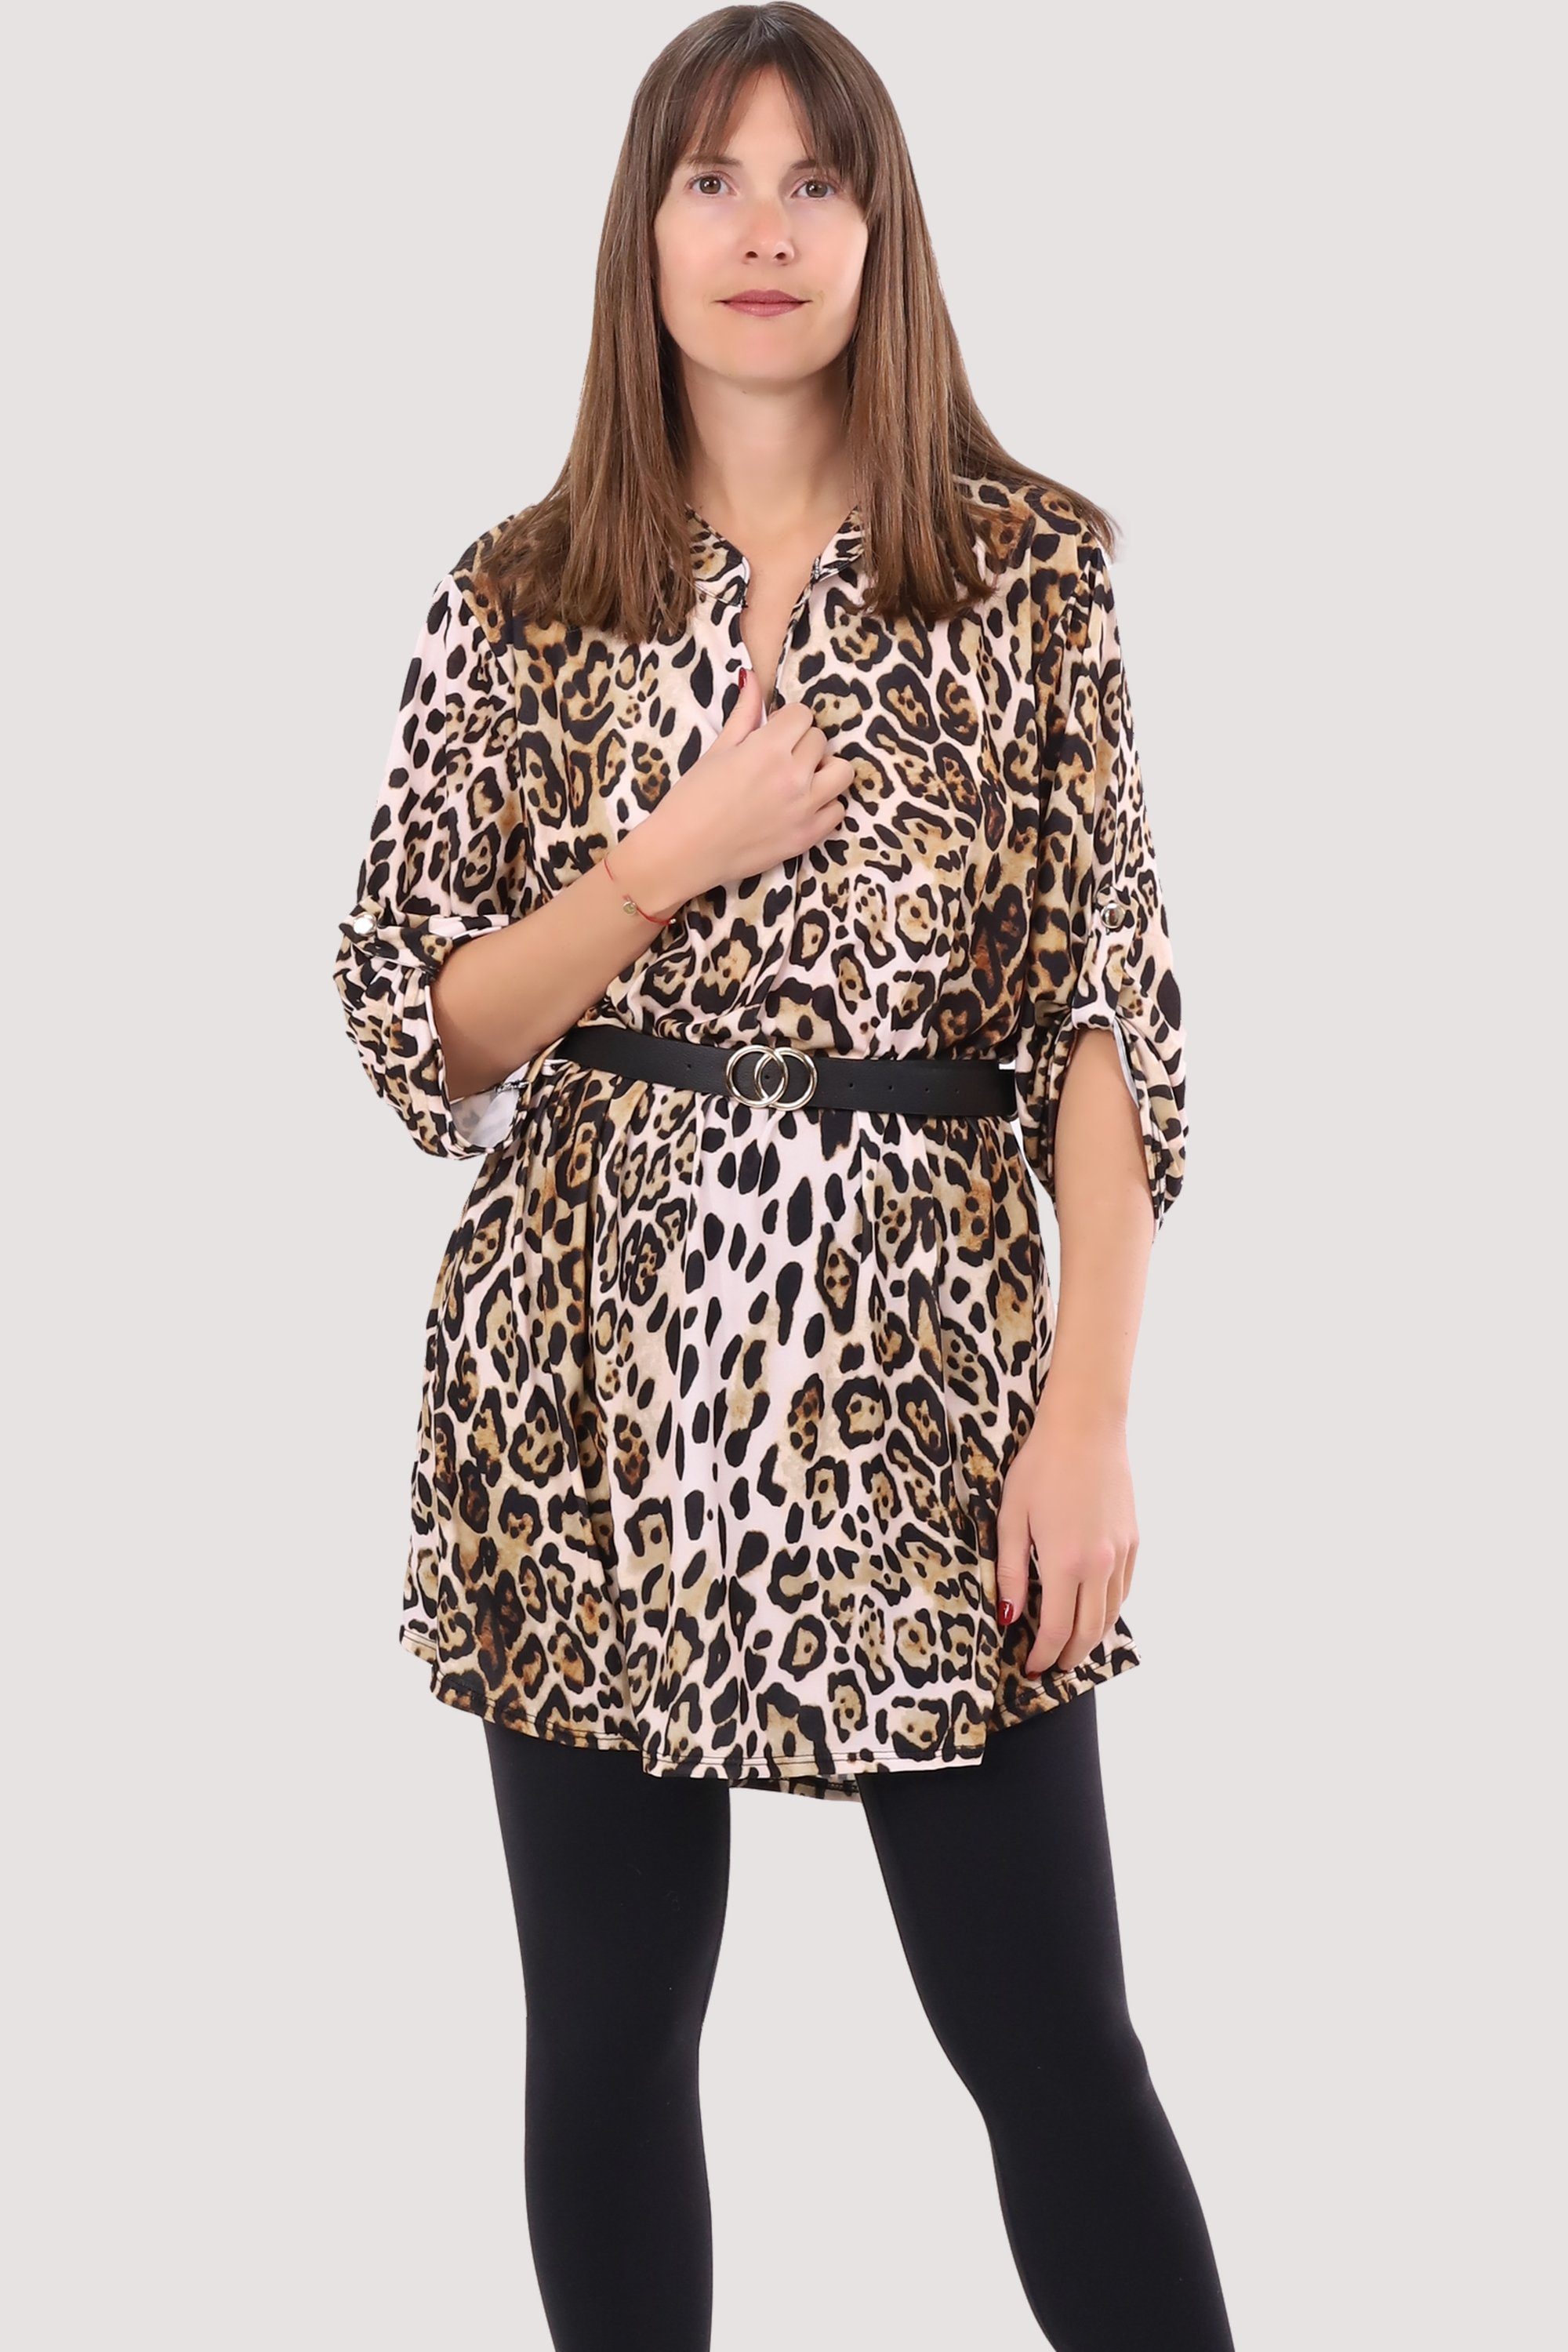 malito more than fashion Druckkleid 23203 Animalprint Kleid Tunika Bluse mit Gürtel Einheitsgröße Gepard 1